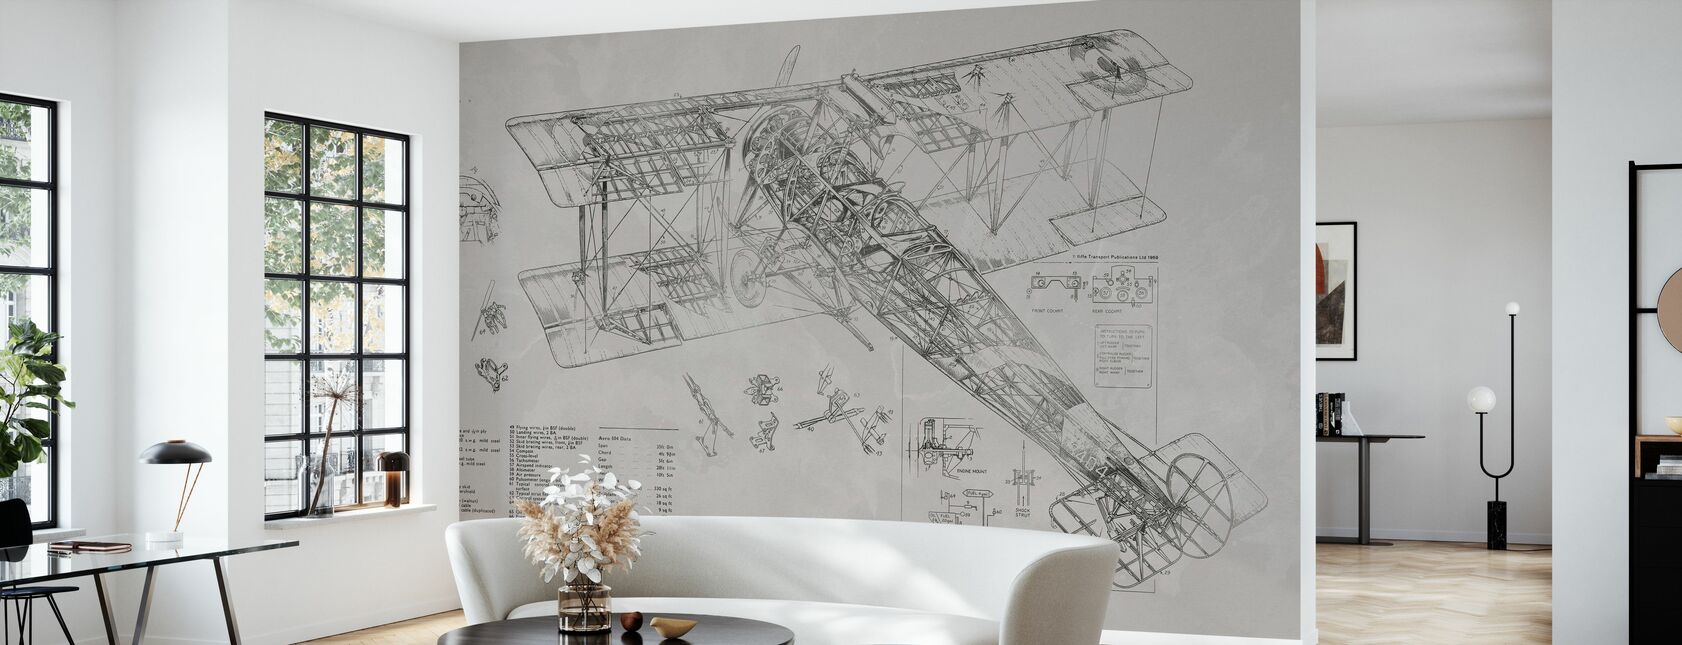 Avro 504K Airplane - Bright - Wallpaper - Living Room